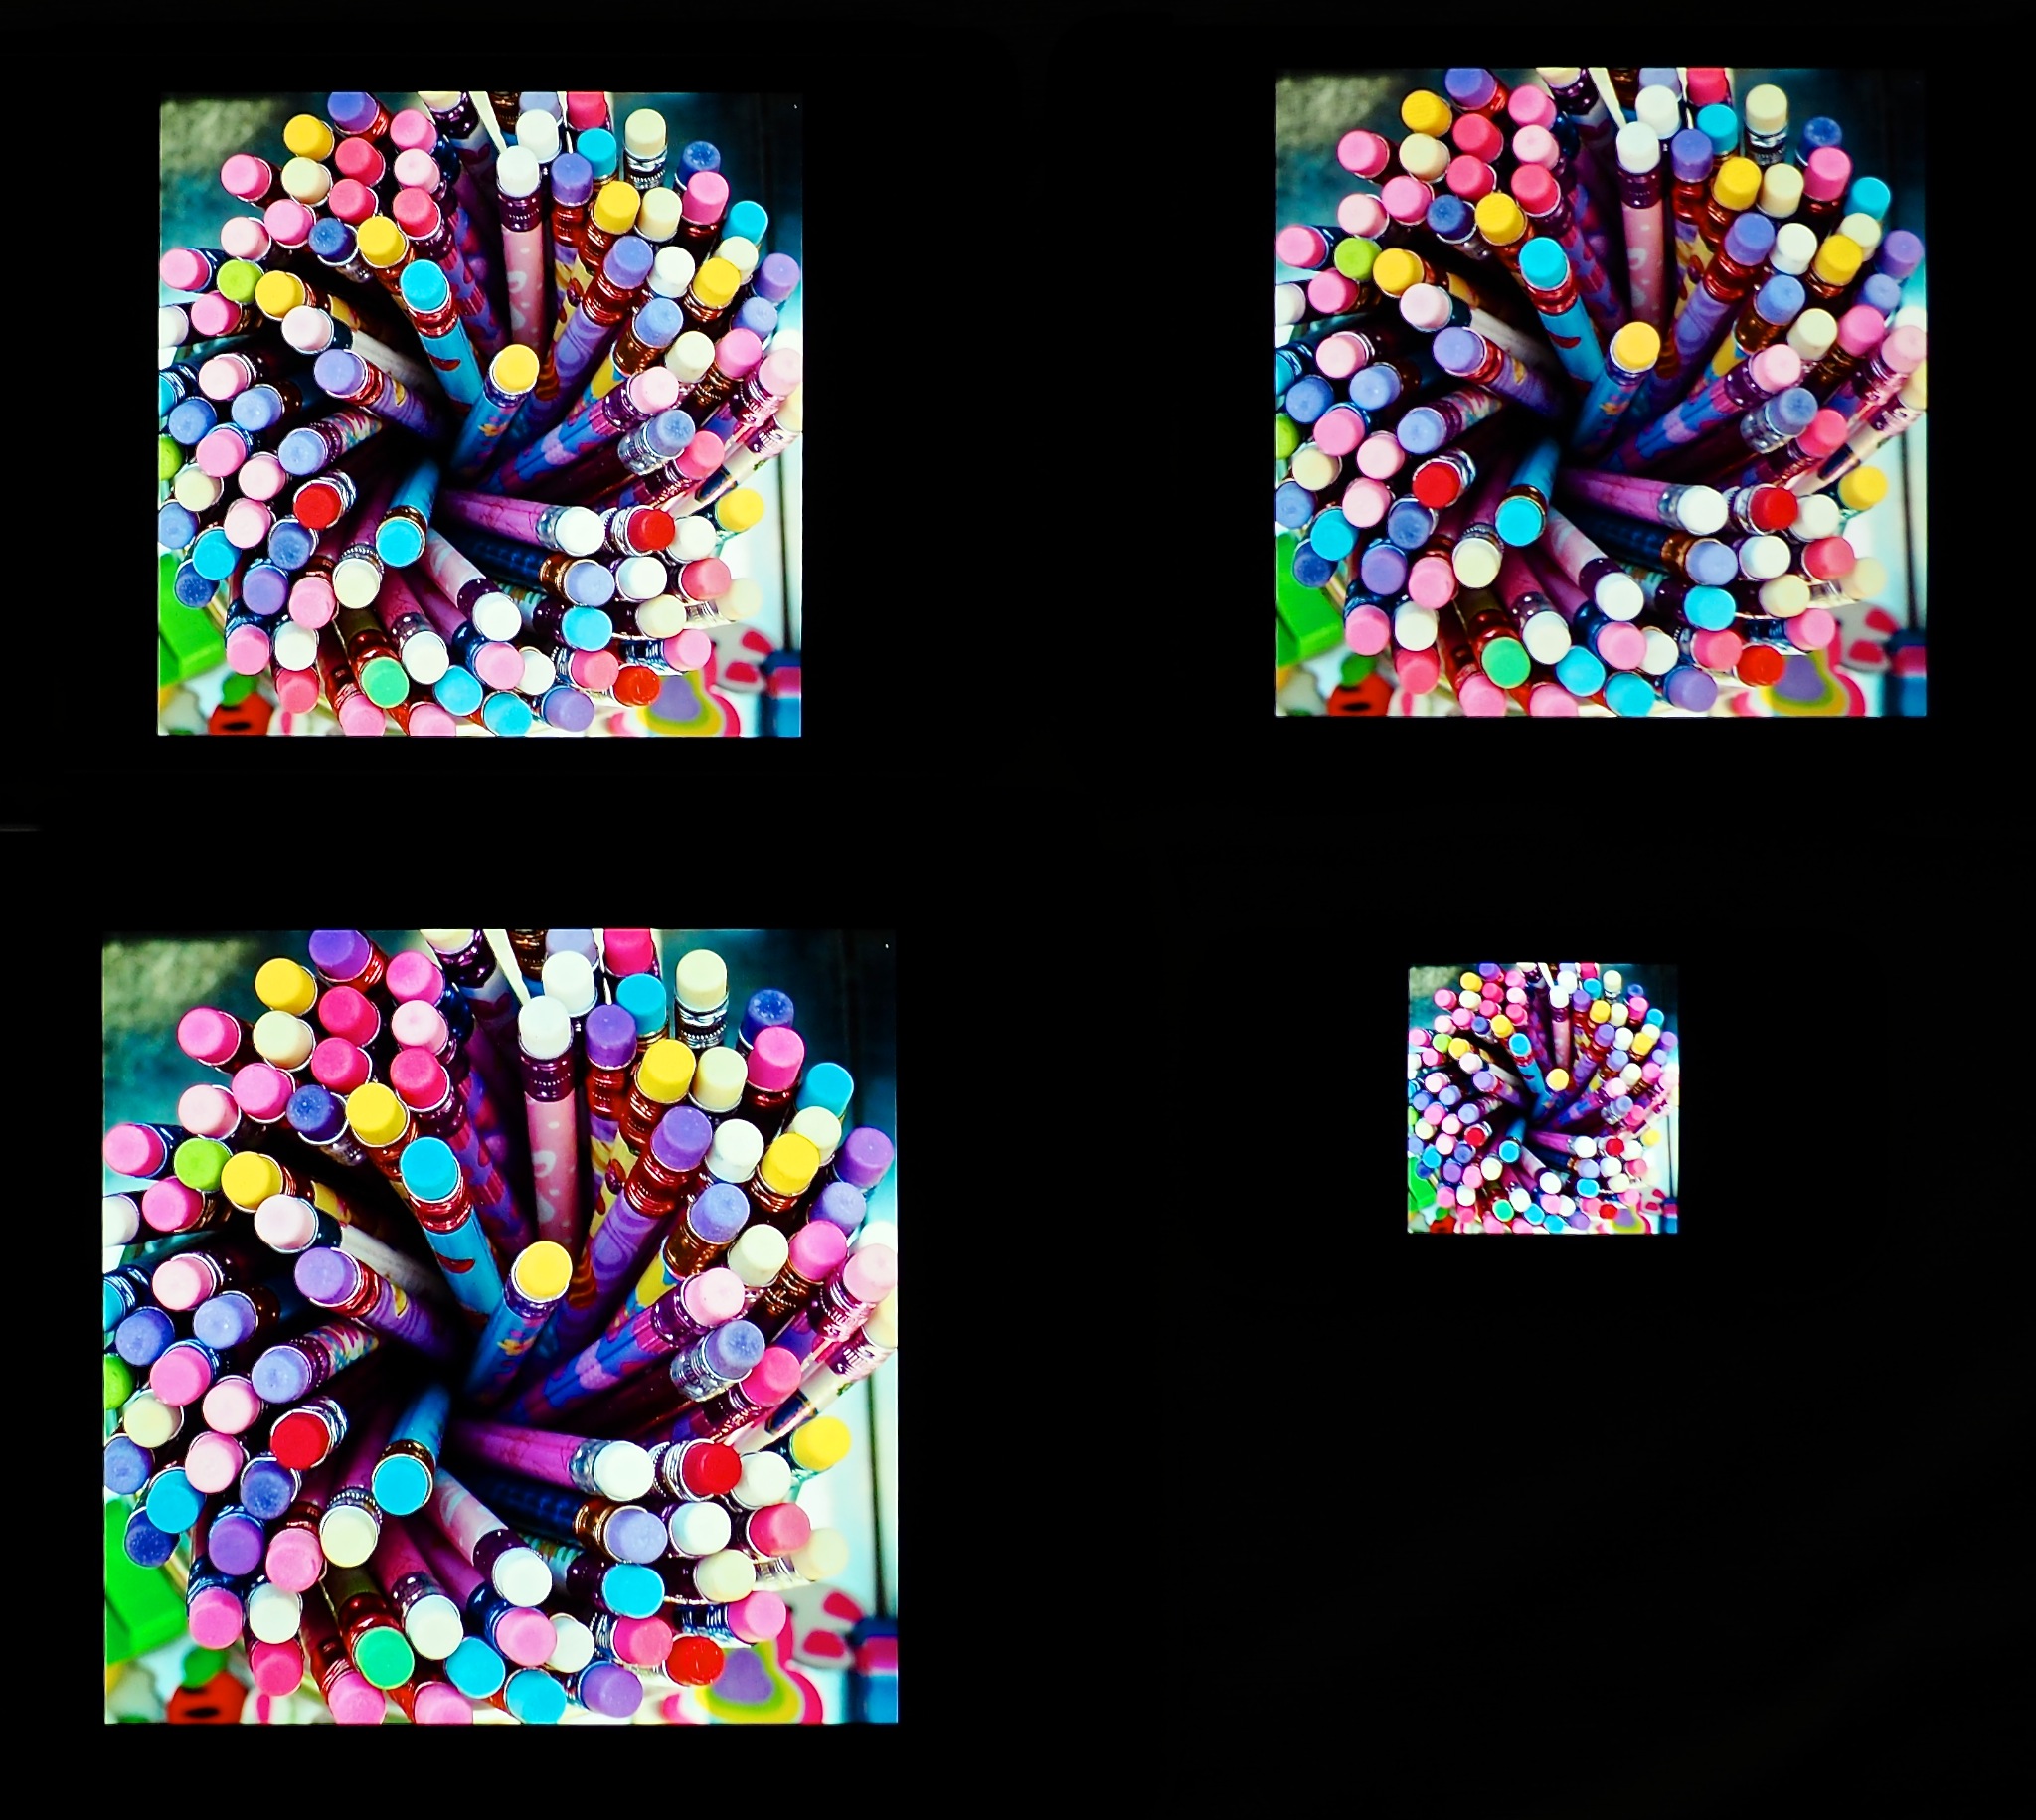 http://thedigitalstory.com/2013/11/19/color-gamut-comparison.jpg